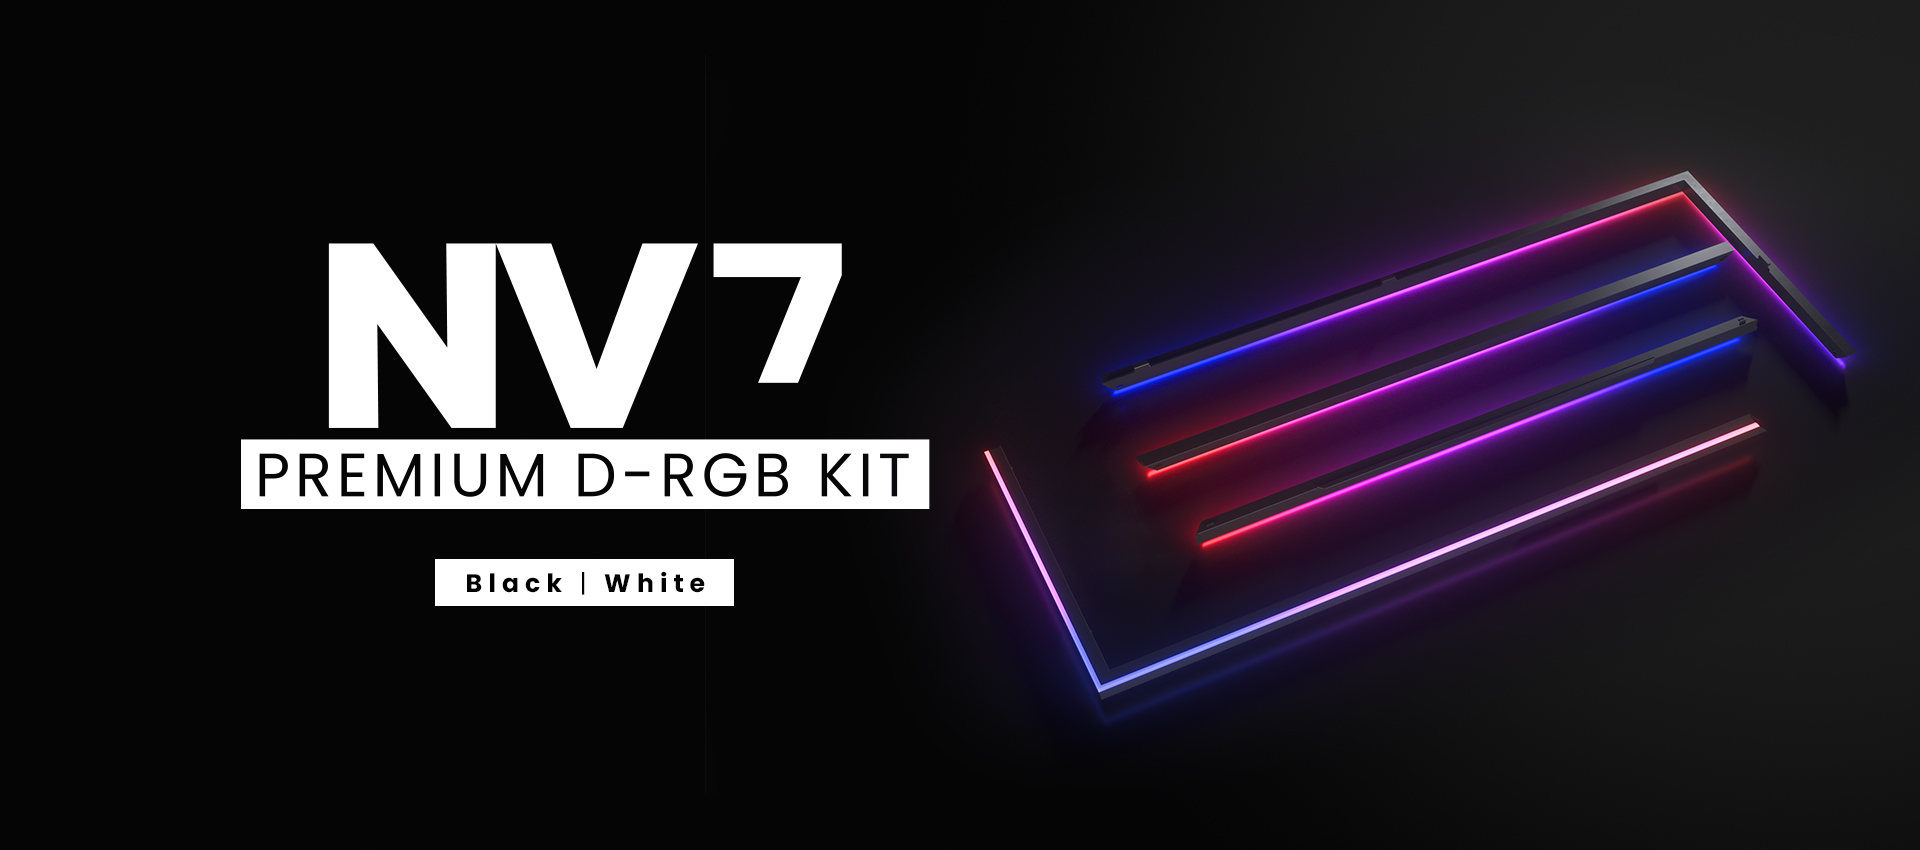 Banner image of NV9 LED kit